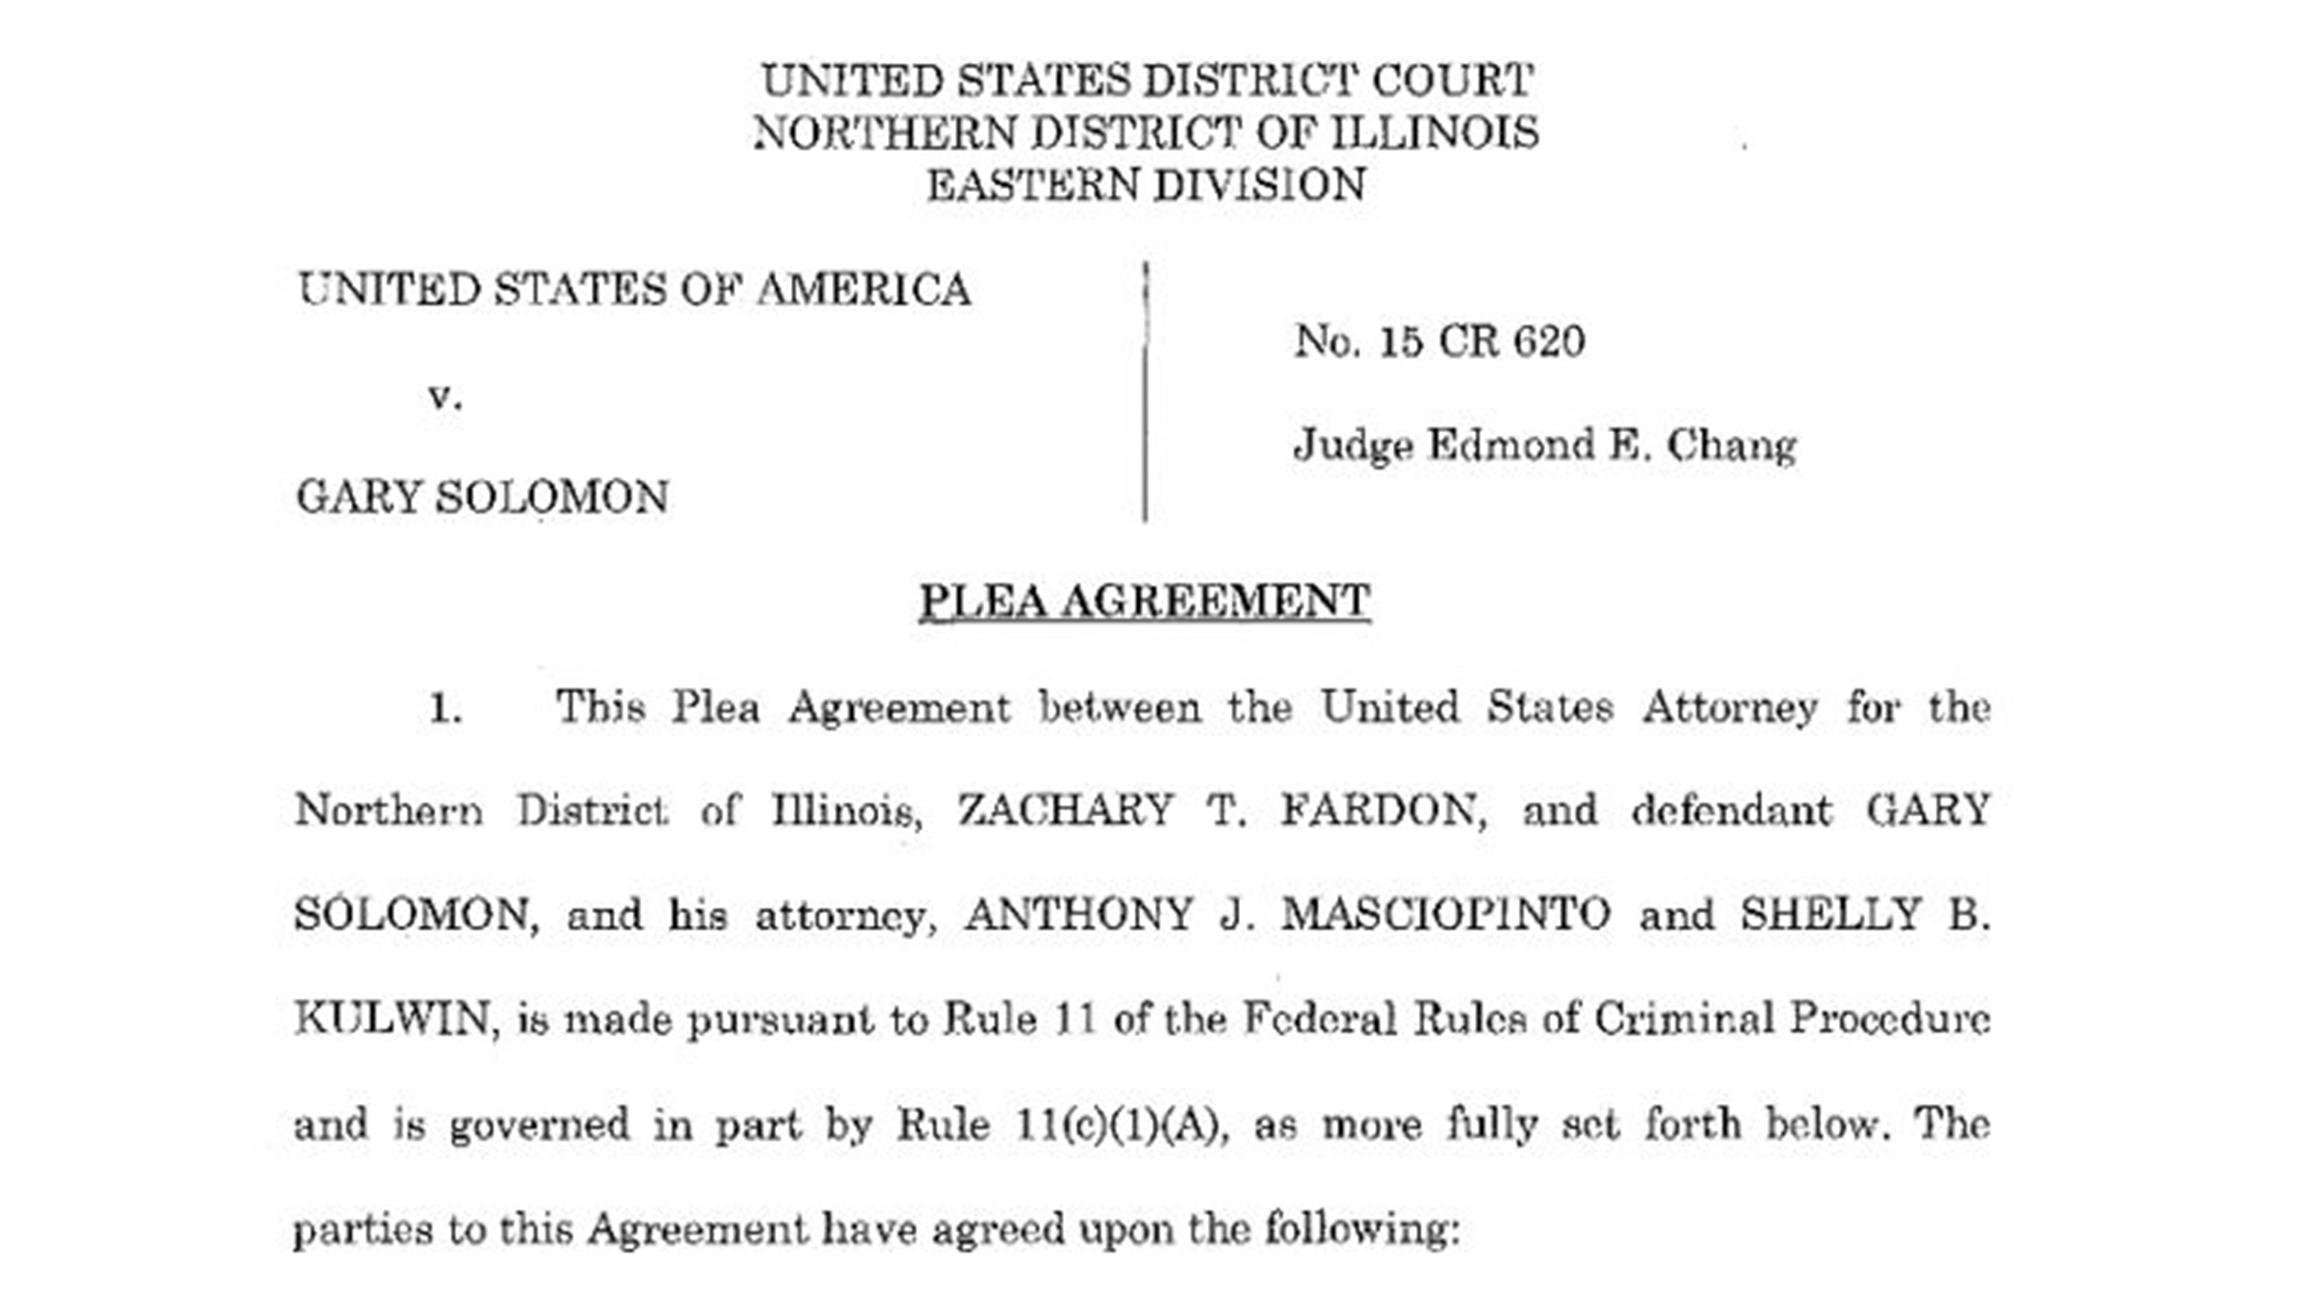 Document: Read the plea agreement